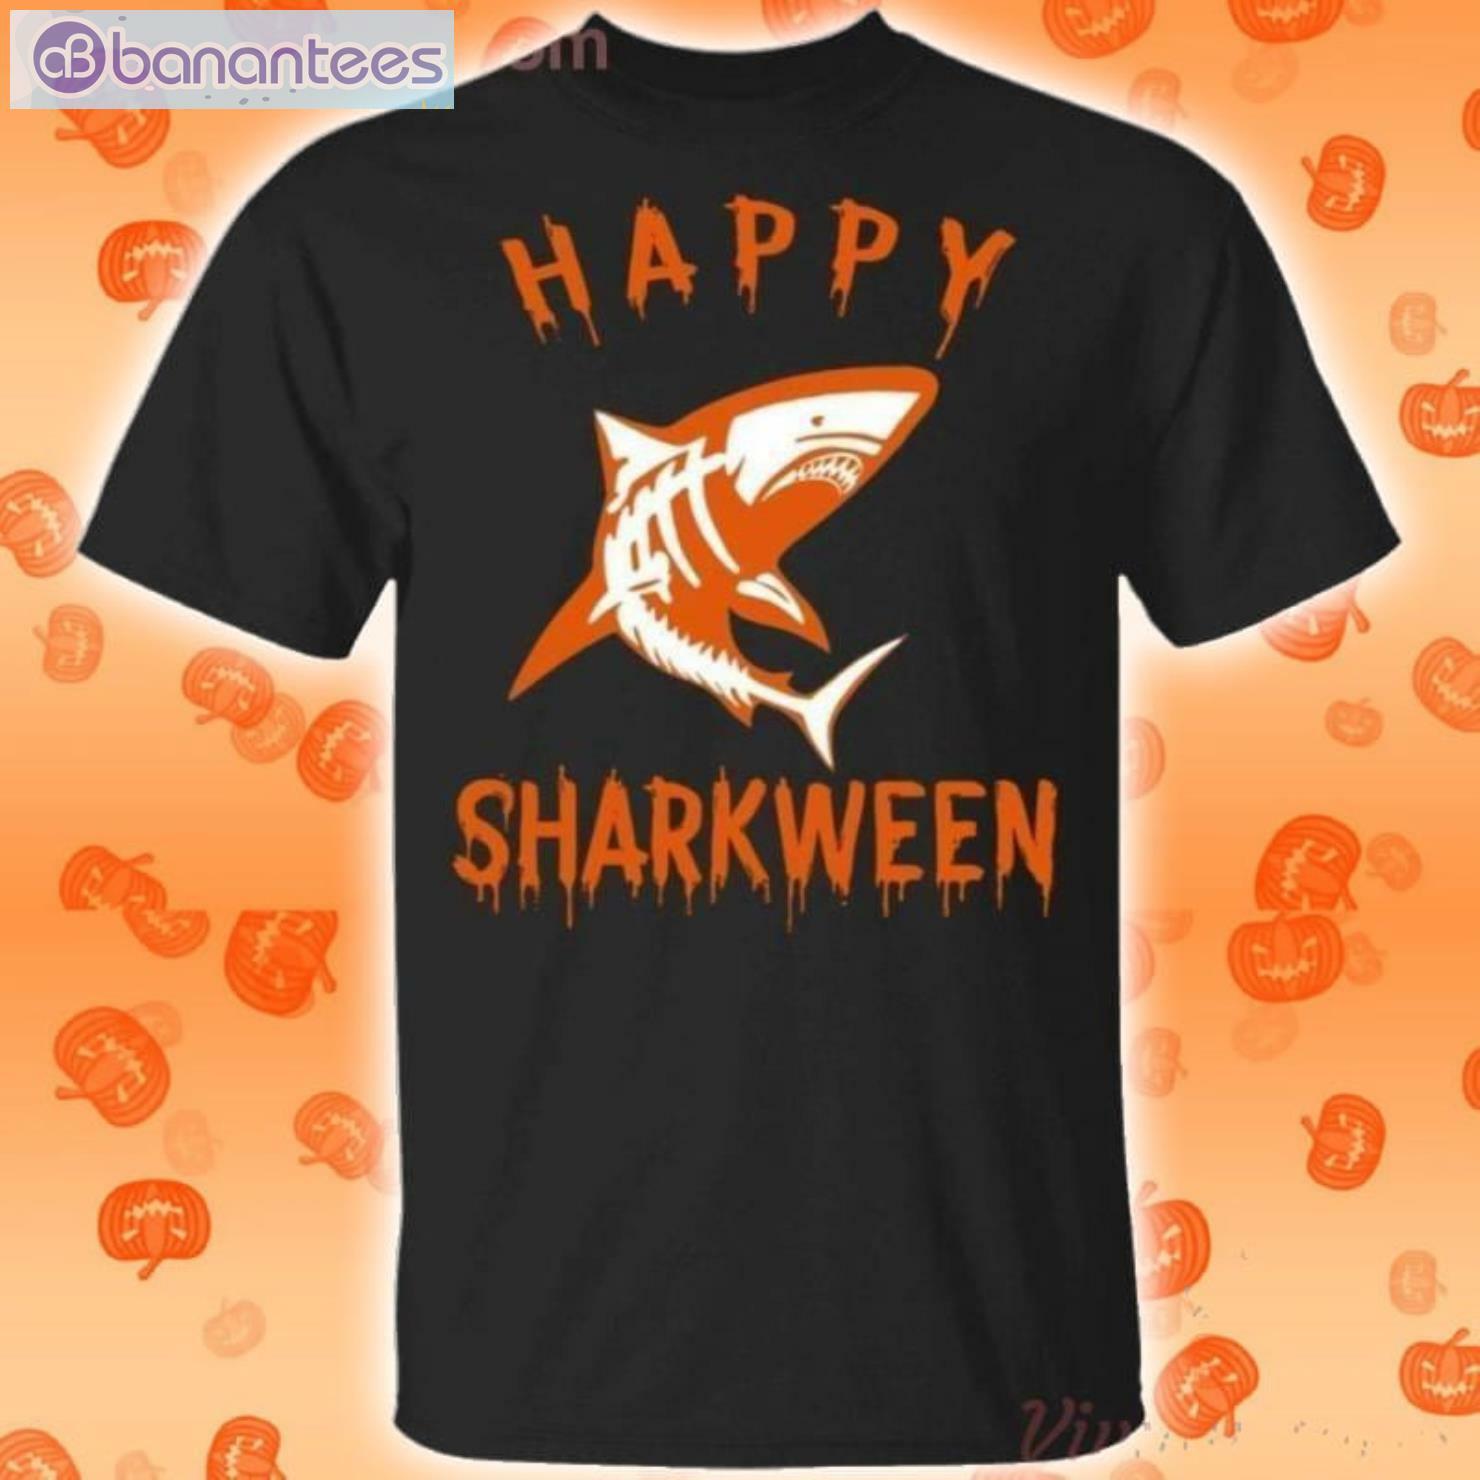 Happy Sharkween Halloween Funny T-Shirt Product Photo 1 Product photo 1